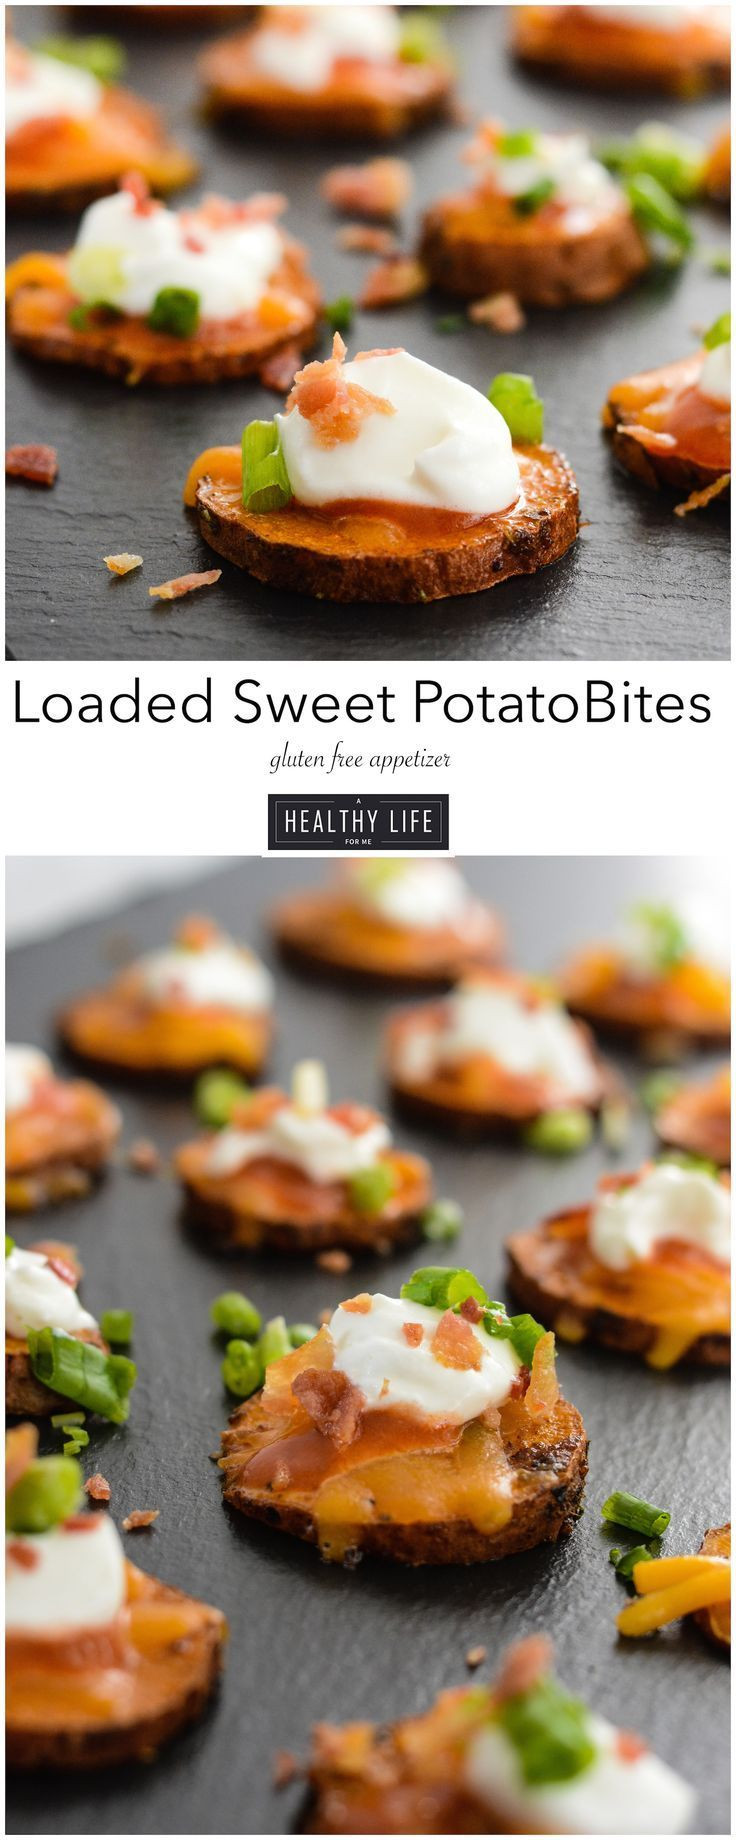 Healthy Thanksgiving Appetizer Recipes
 Loaded Sweet Potato Bites Recipe